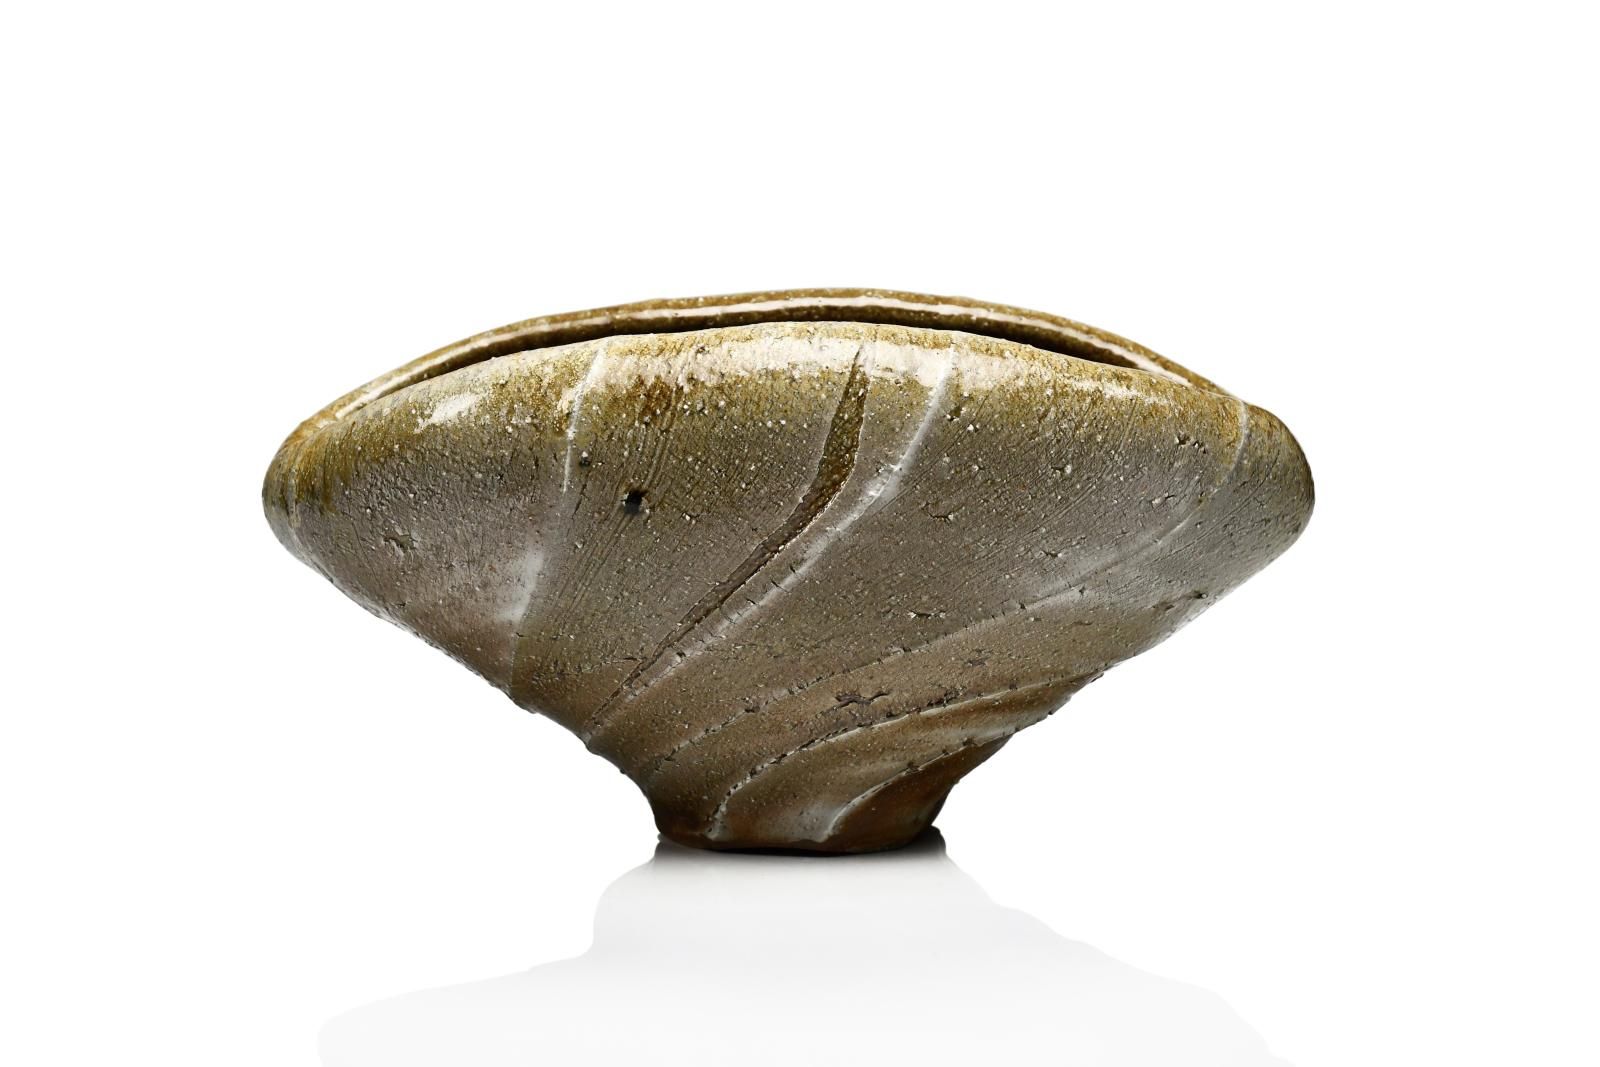 Spiral Vase Form Bizen Clay Body, Anagama Fired with Heavy Pine Wood AshSigned Wooden Box by Kazuya Ishida